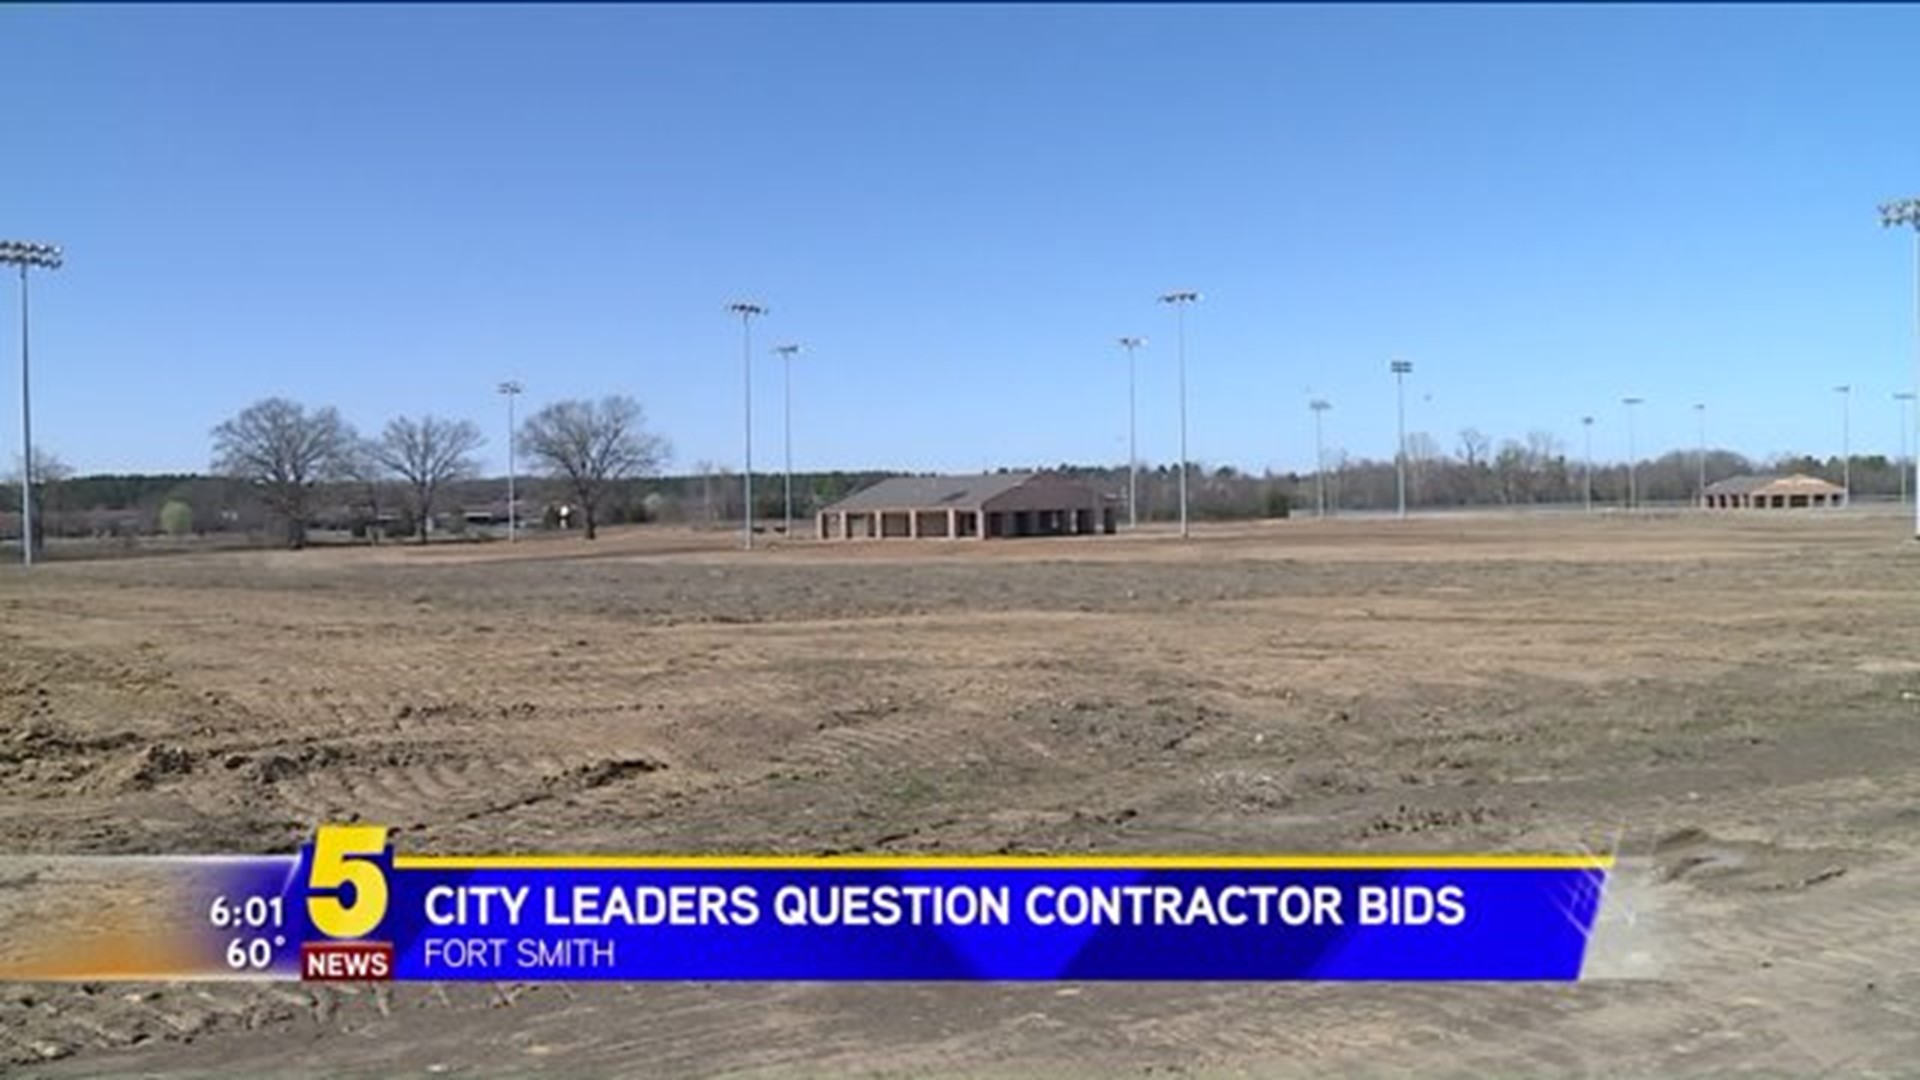 City Leaders Question Contractor Bids